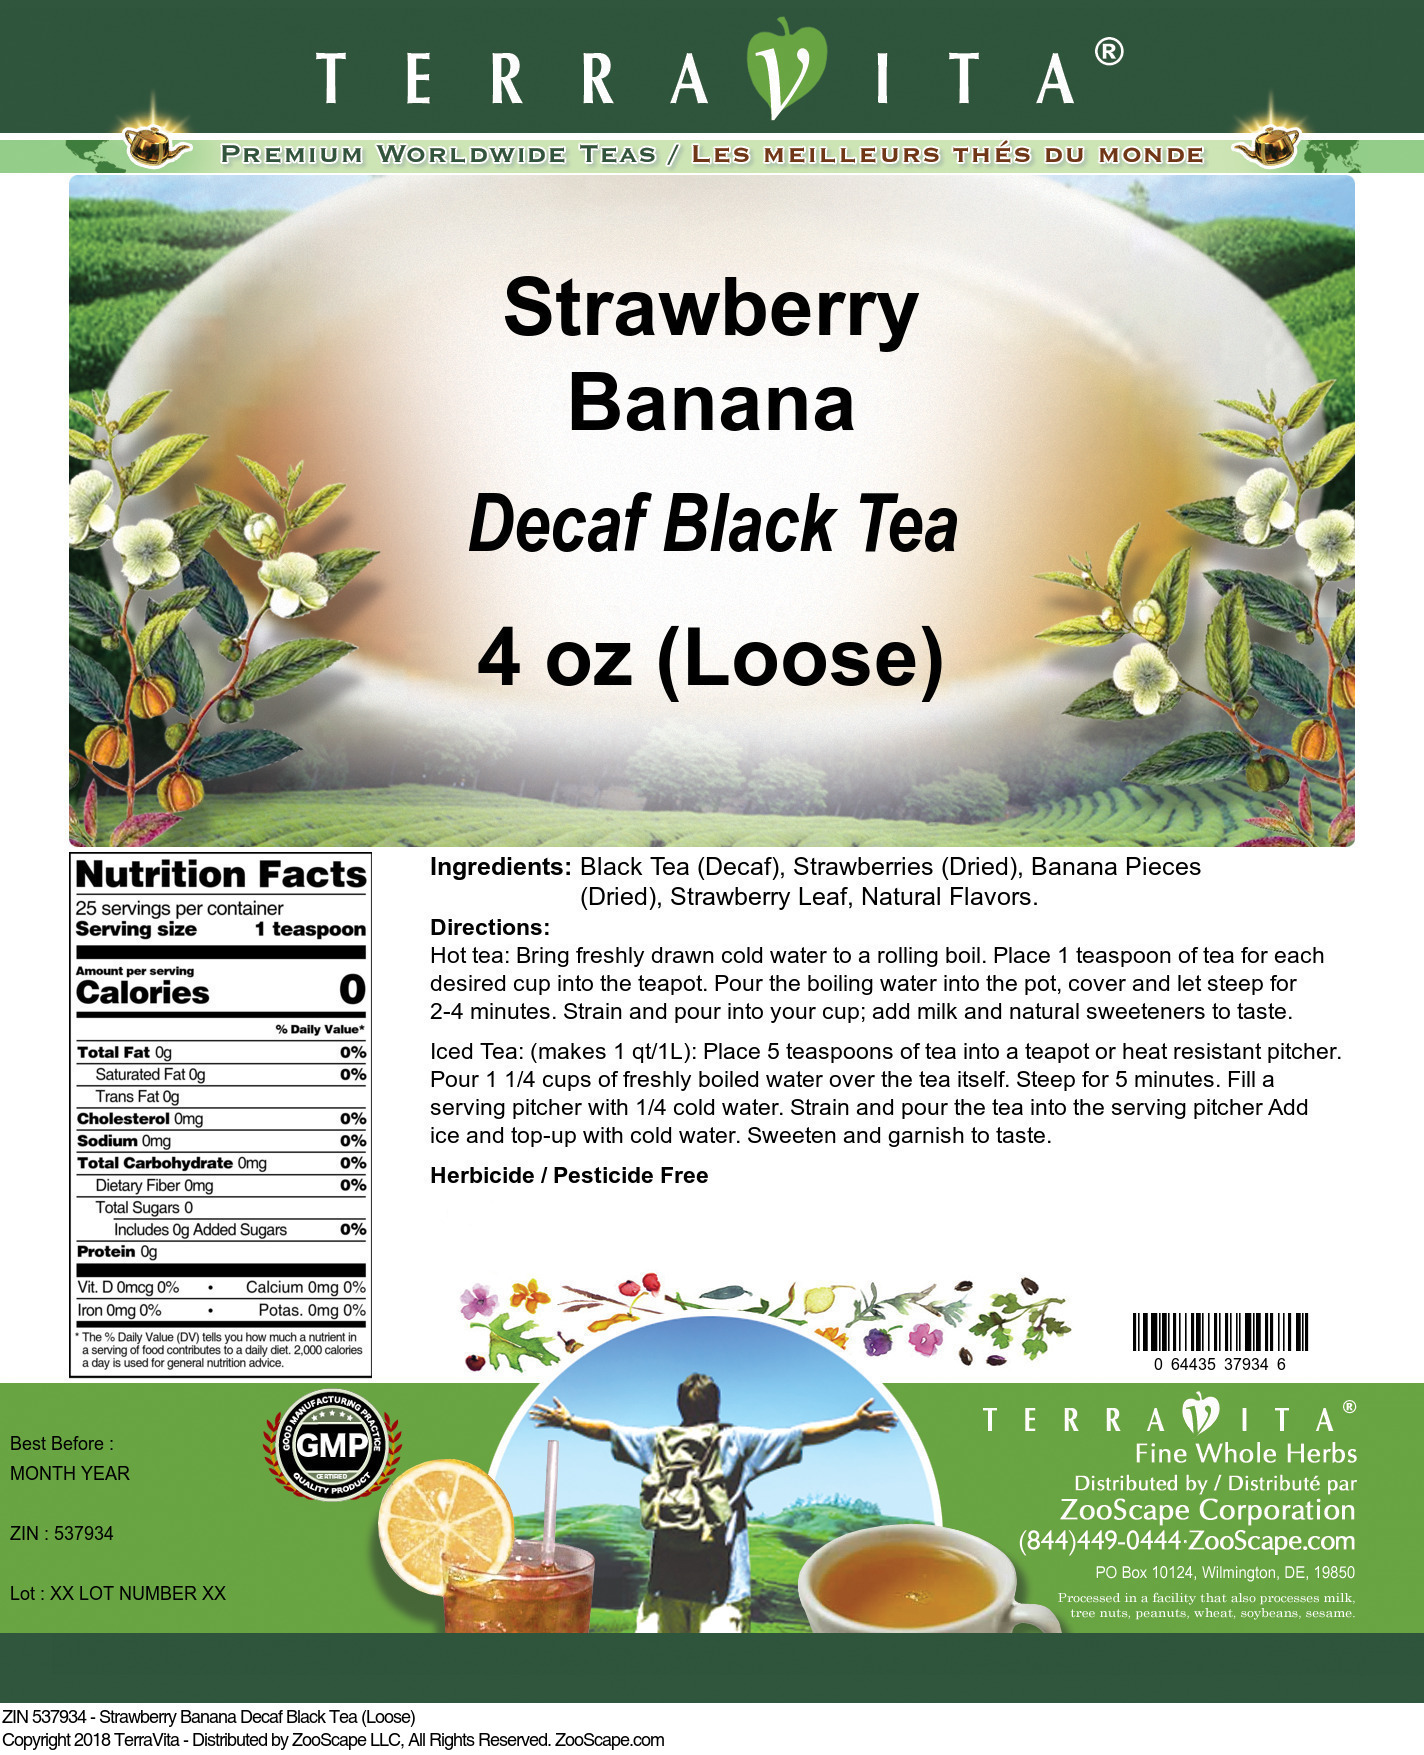 Strawberry Banana Decaf Black Tea (Loose) - Label